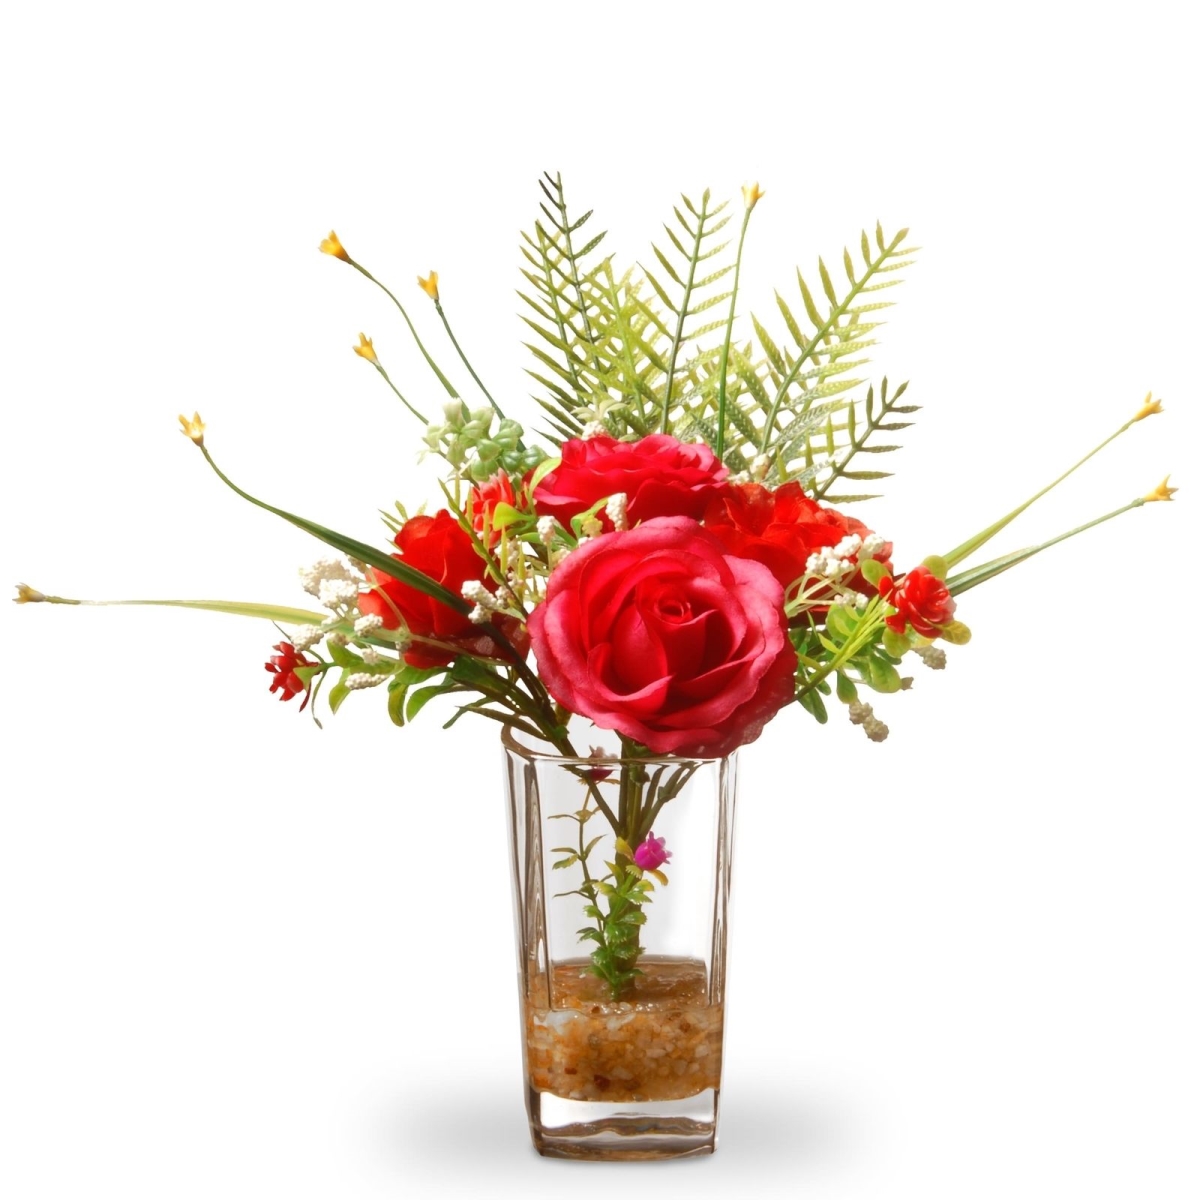 National Tree Nf36-1291-1 Arrangement In Glass Vase - Red Rose